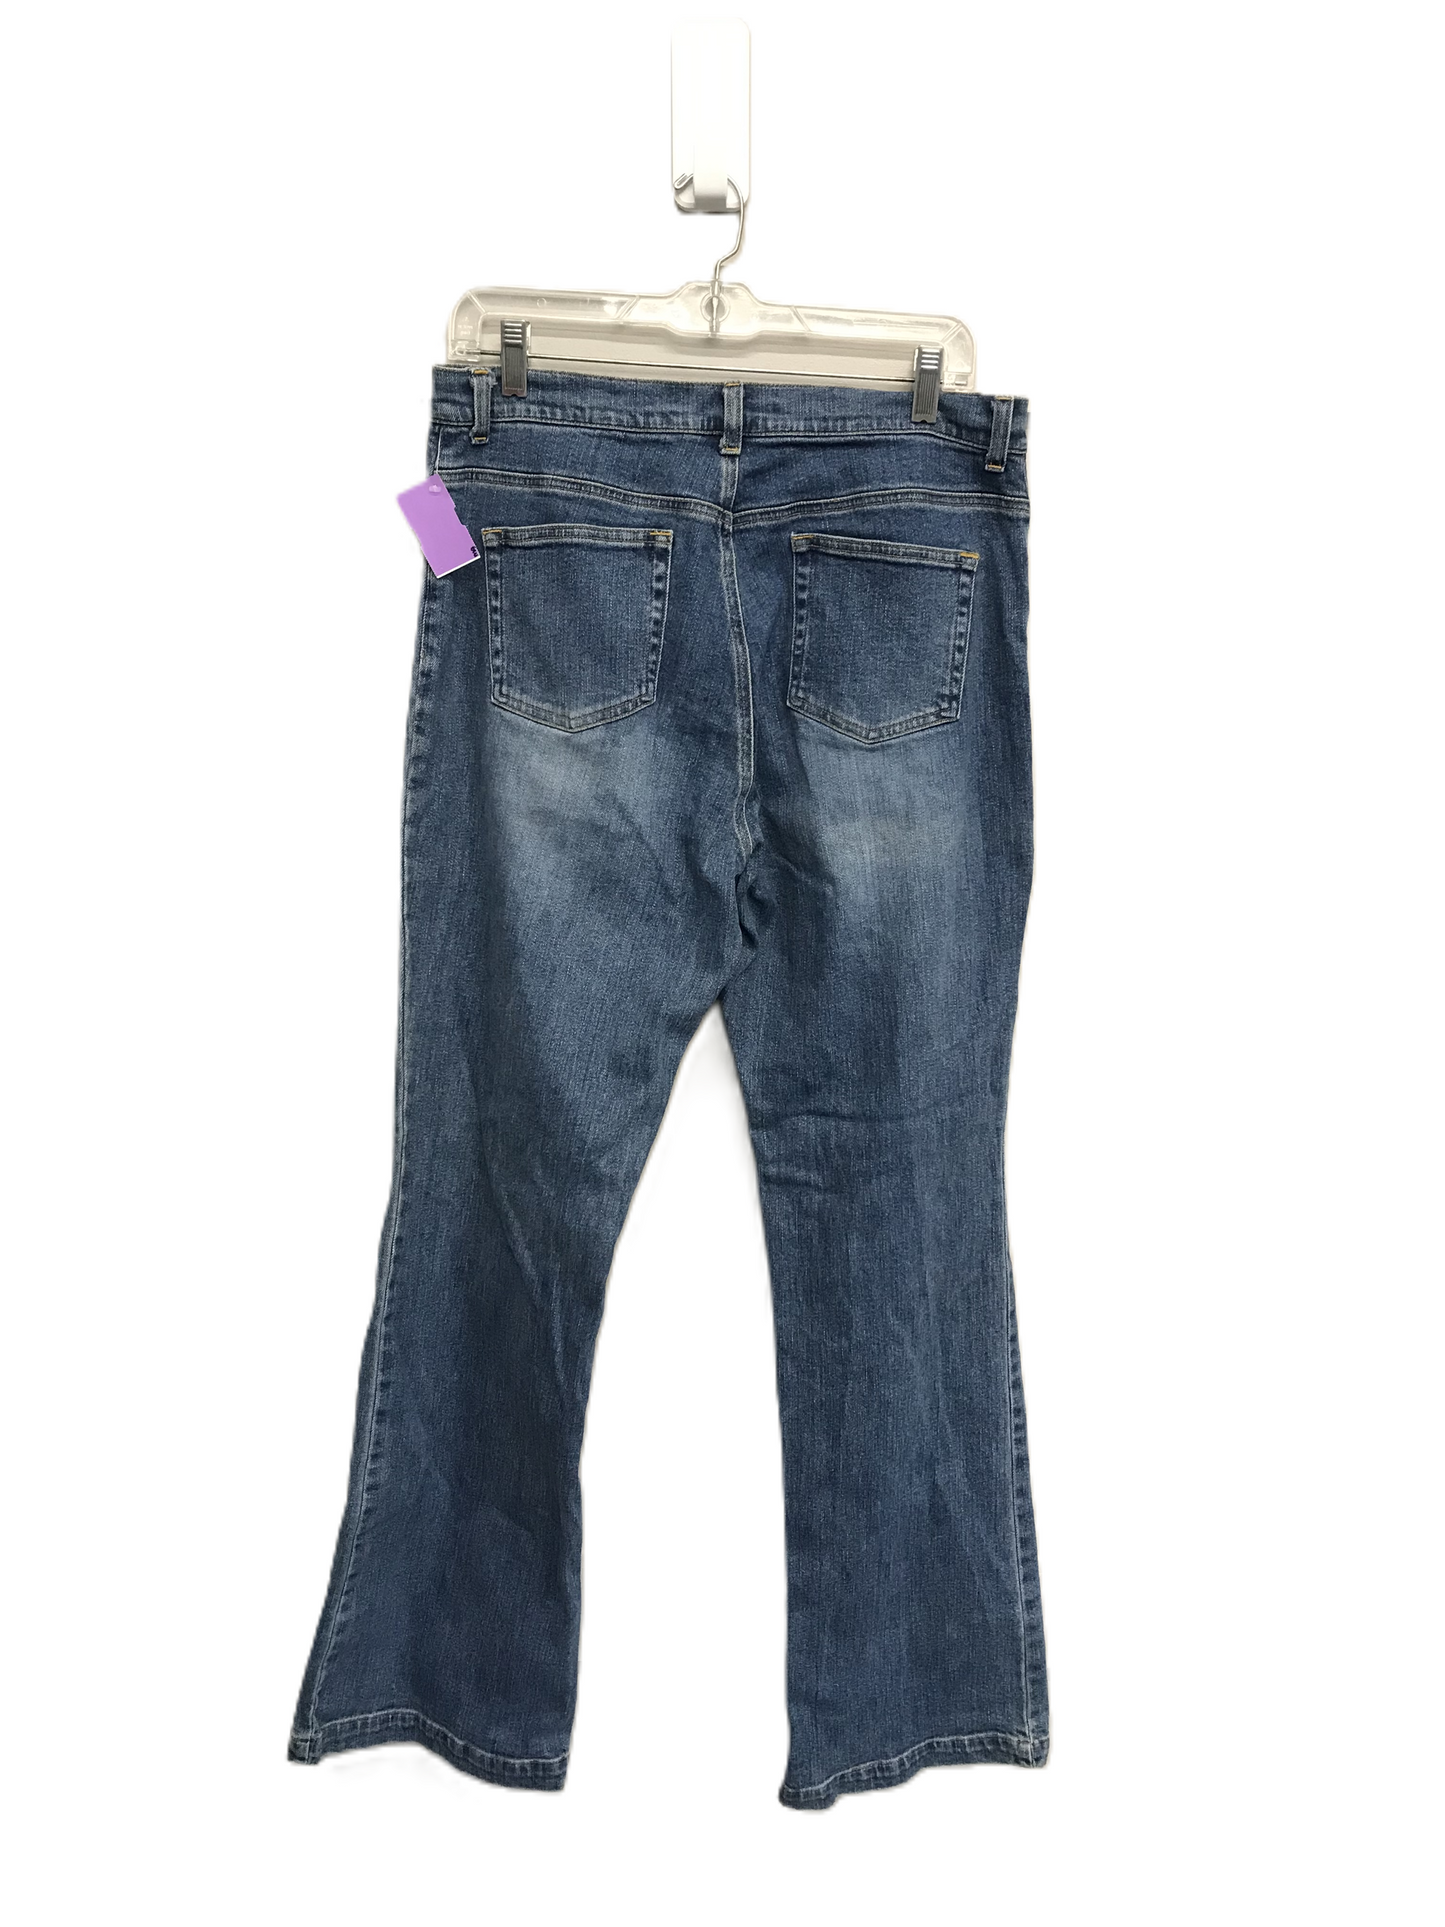 Blue Denim Jeans Flared By Jones New York, Size: 14